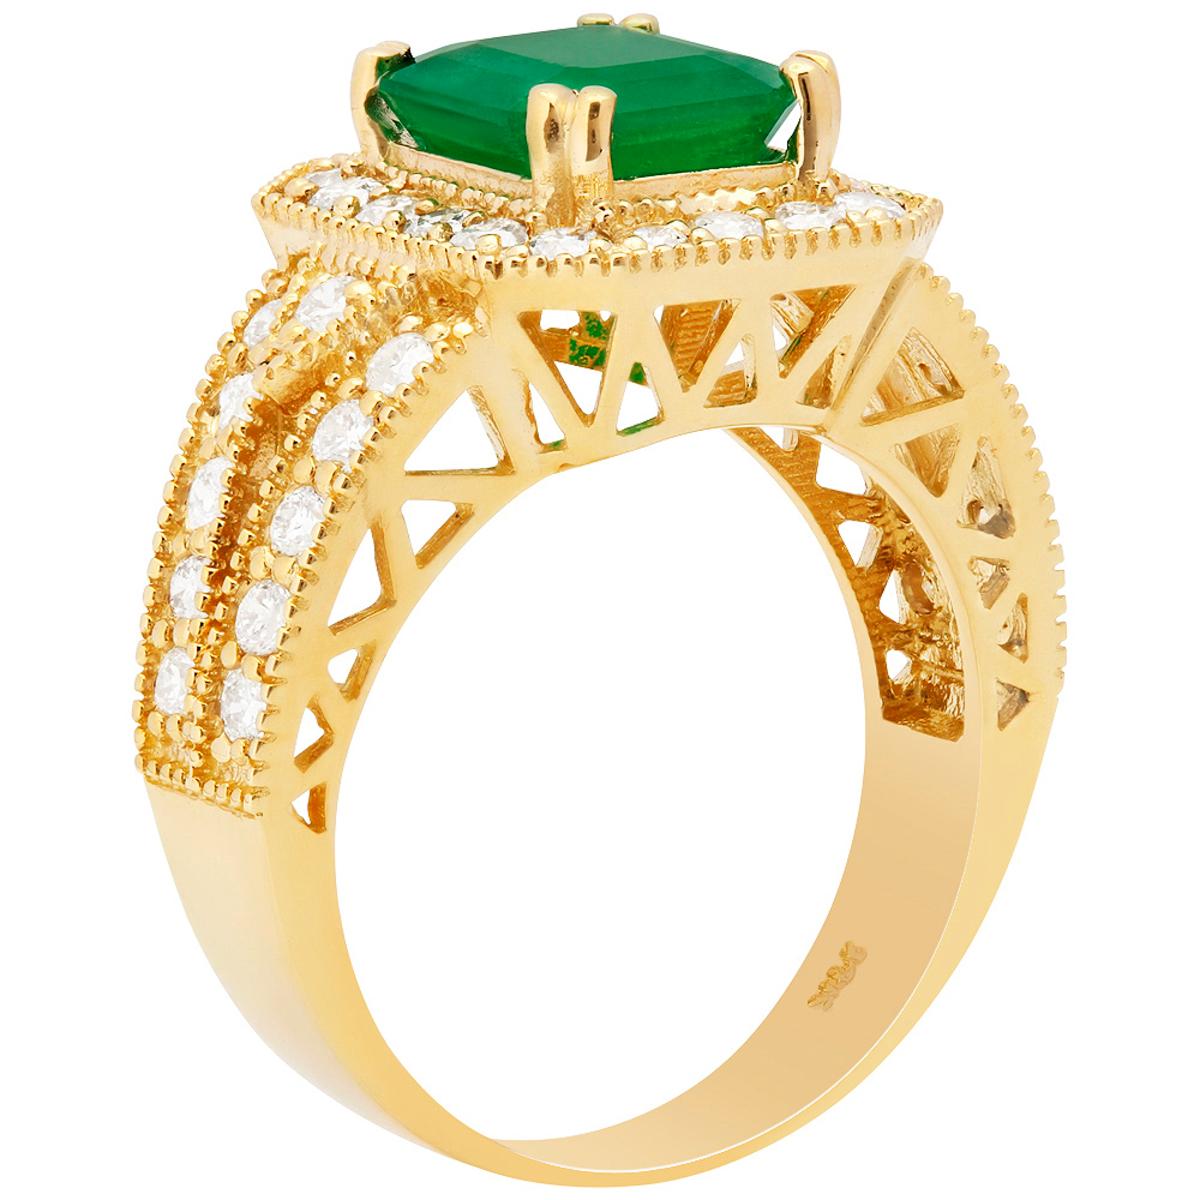 14k Yellow Gold 2.34ct Emerald 1.28ct Diamond Ring